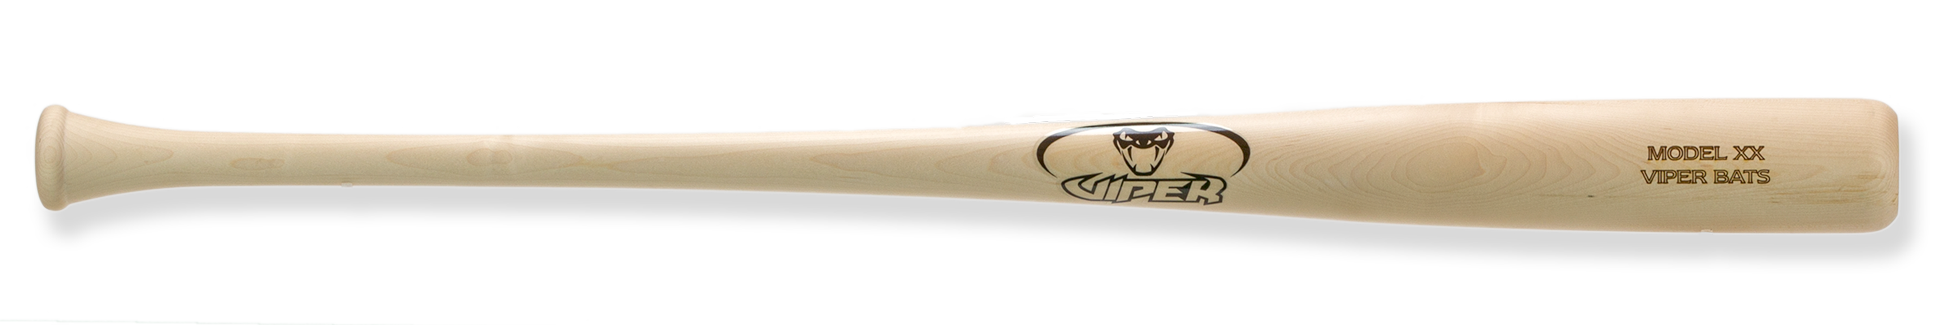 xx blemished wood bat